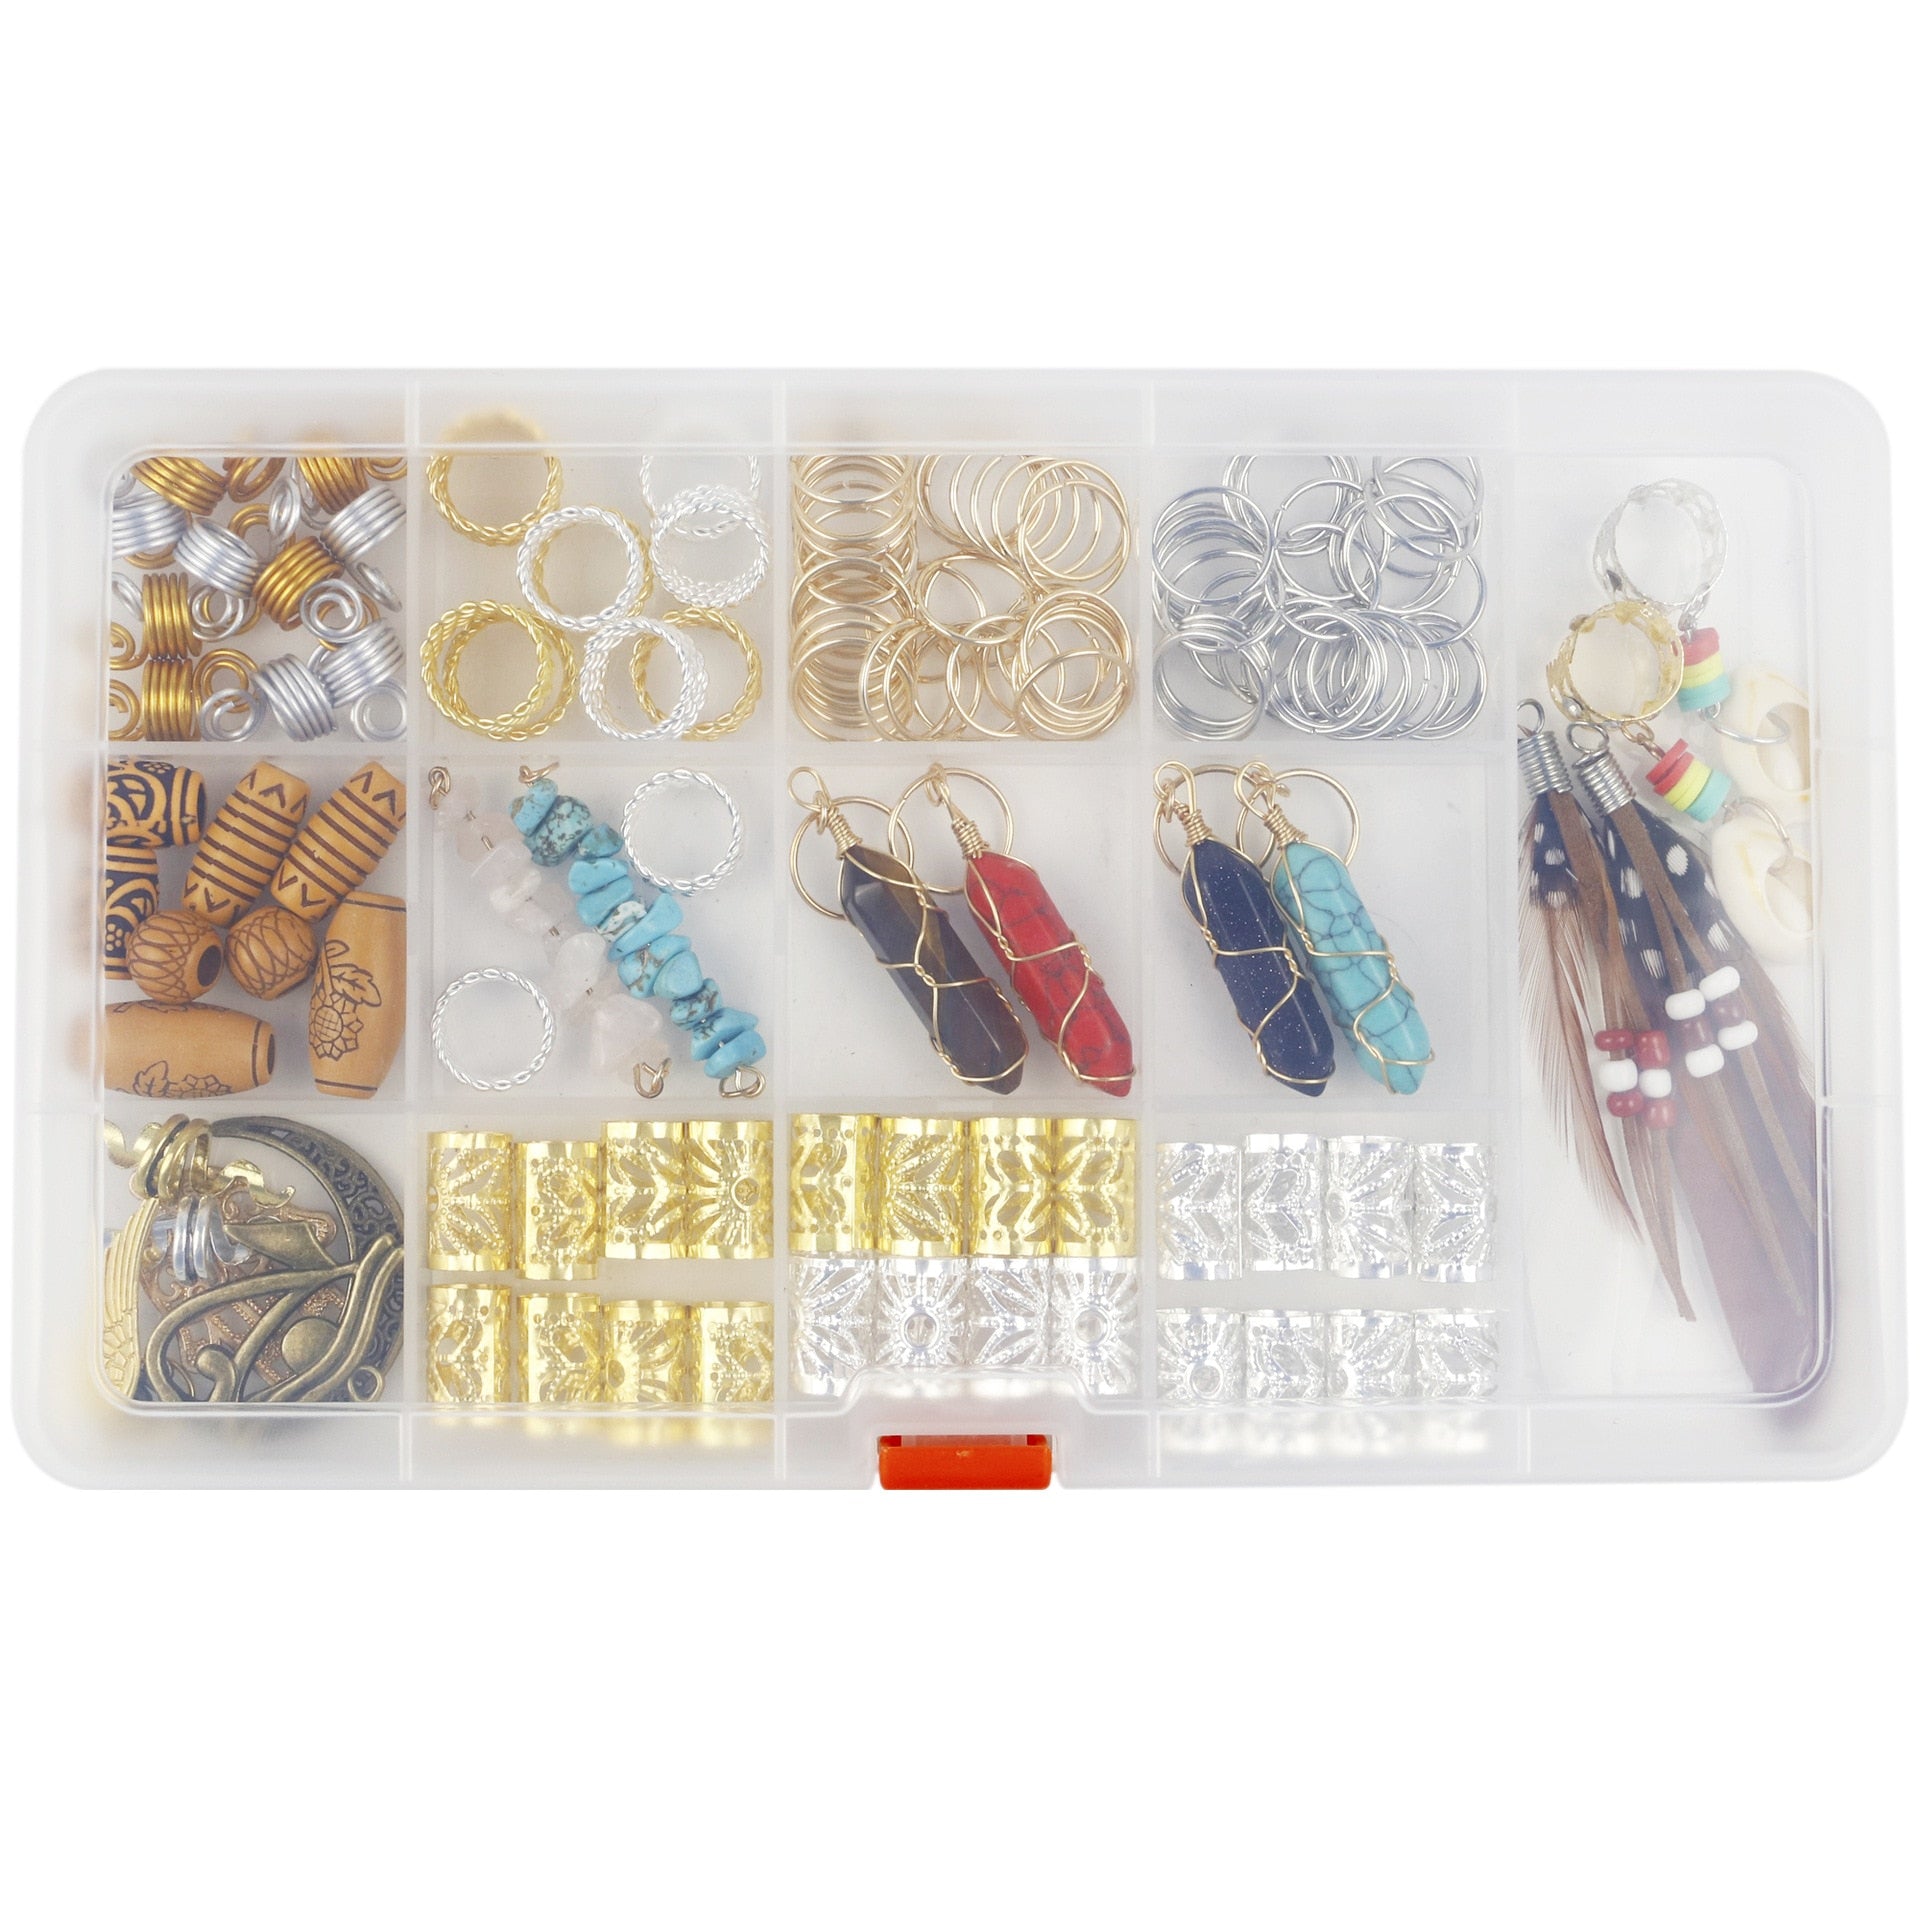 DIY Hair Jewellery Kit Braid Dreadlocks Beads Clips